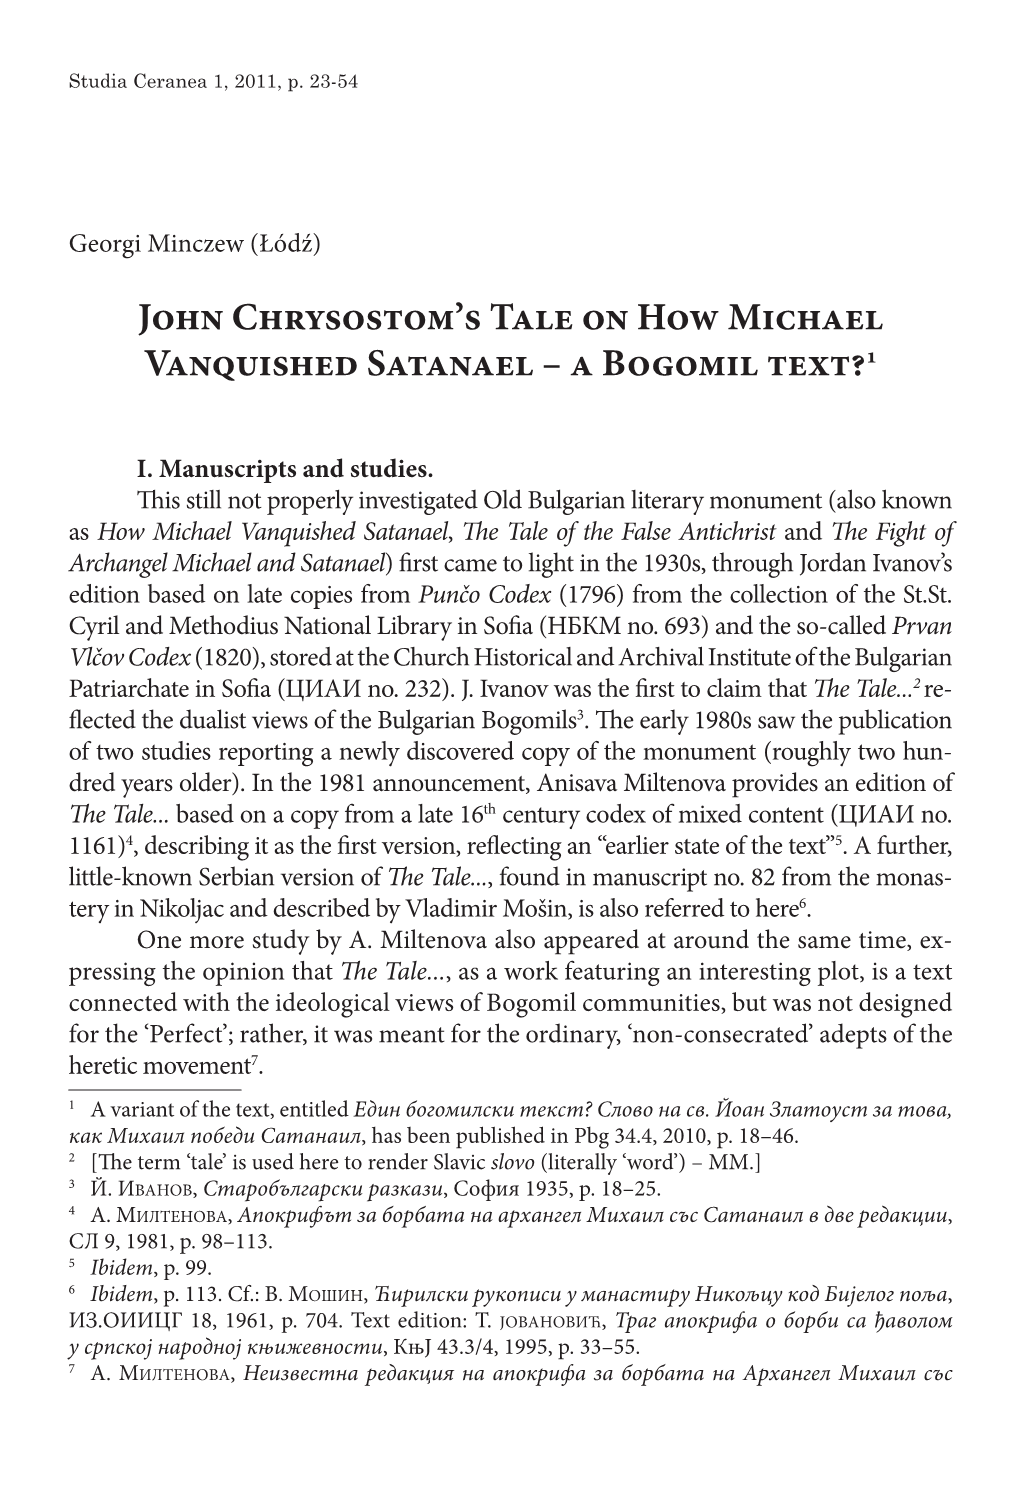 John Chrysostom's Tale on How Michael Vanquished Satanael – A